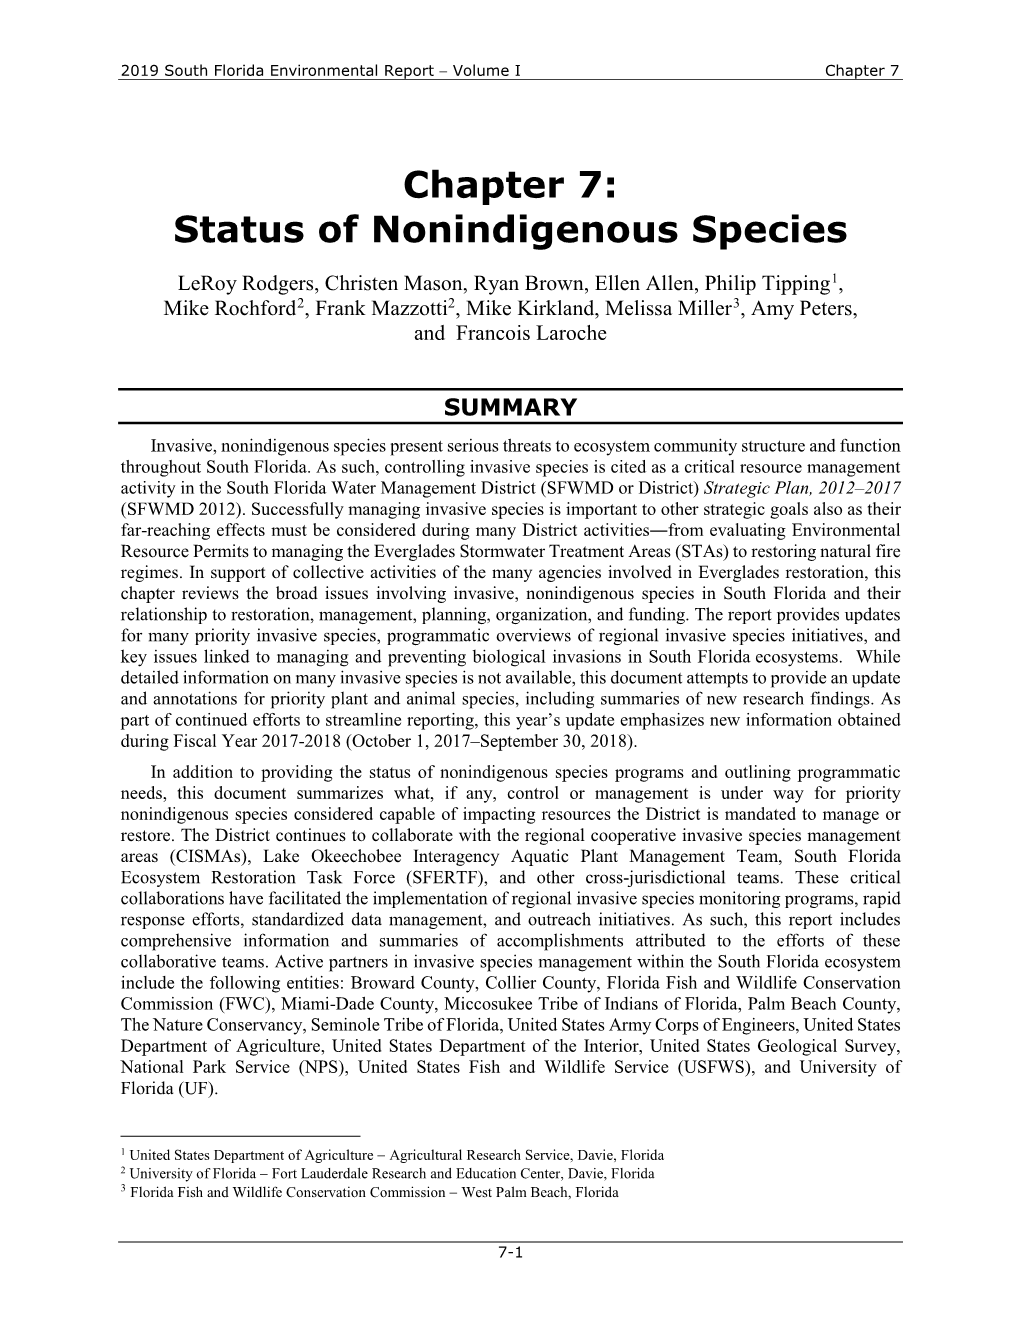 Chapter 7: Status of Nonindigenous Species